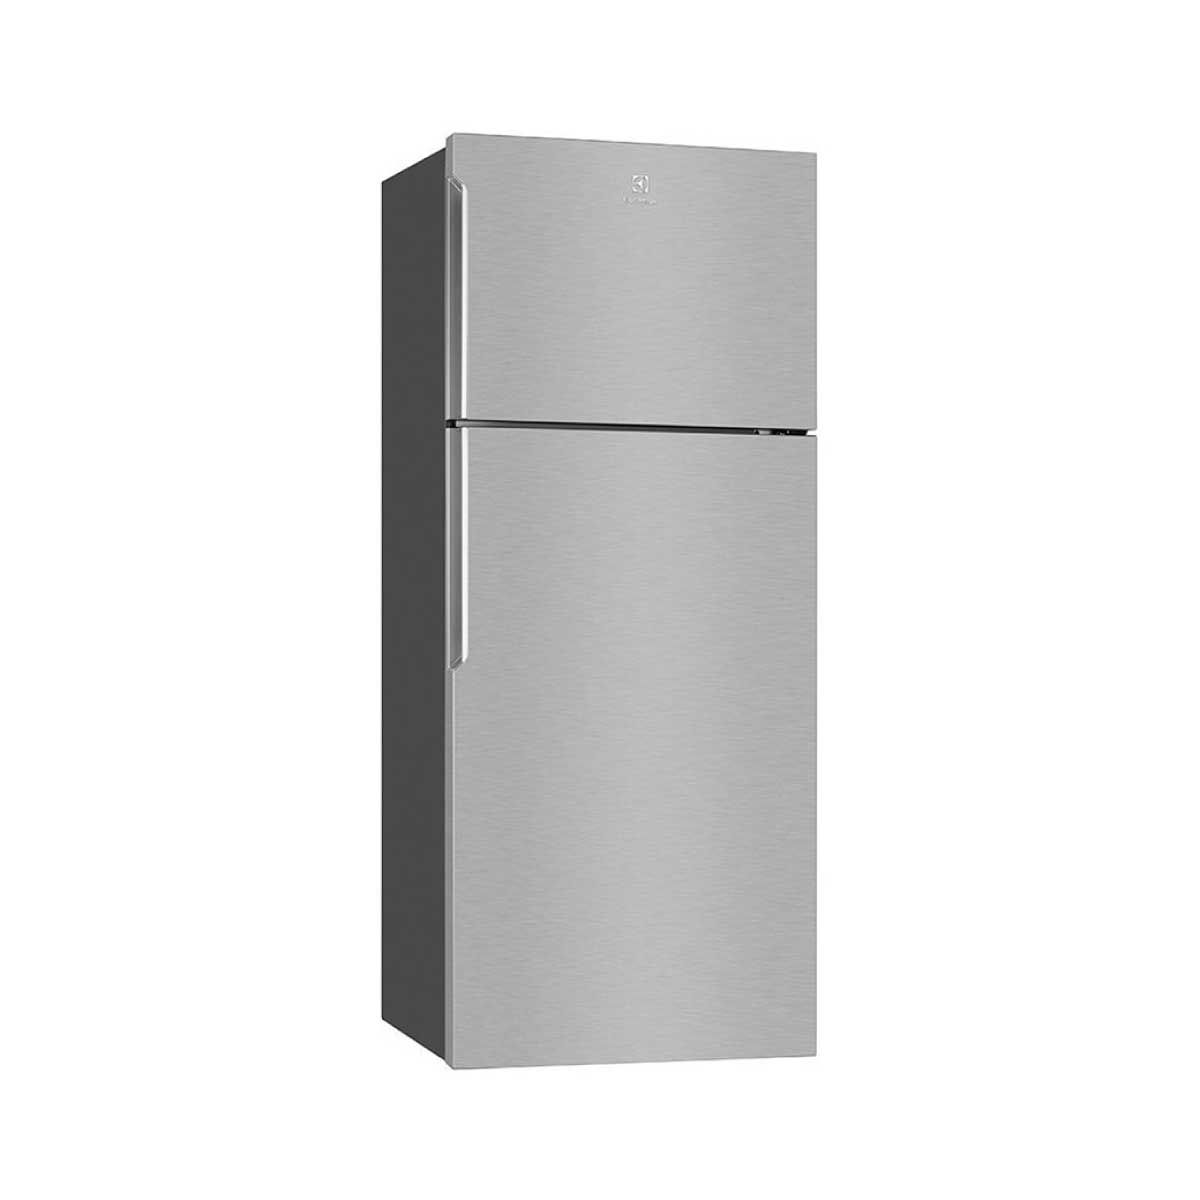 ELECTROLUX ตู้เย็น 2 ประตู  NutriFresh Inverter  ลิตร 15.2 คิว สี Silver  รุ่น ETB4600B-A